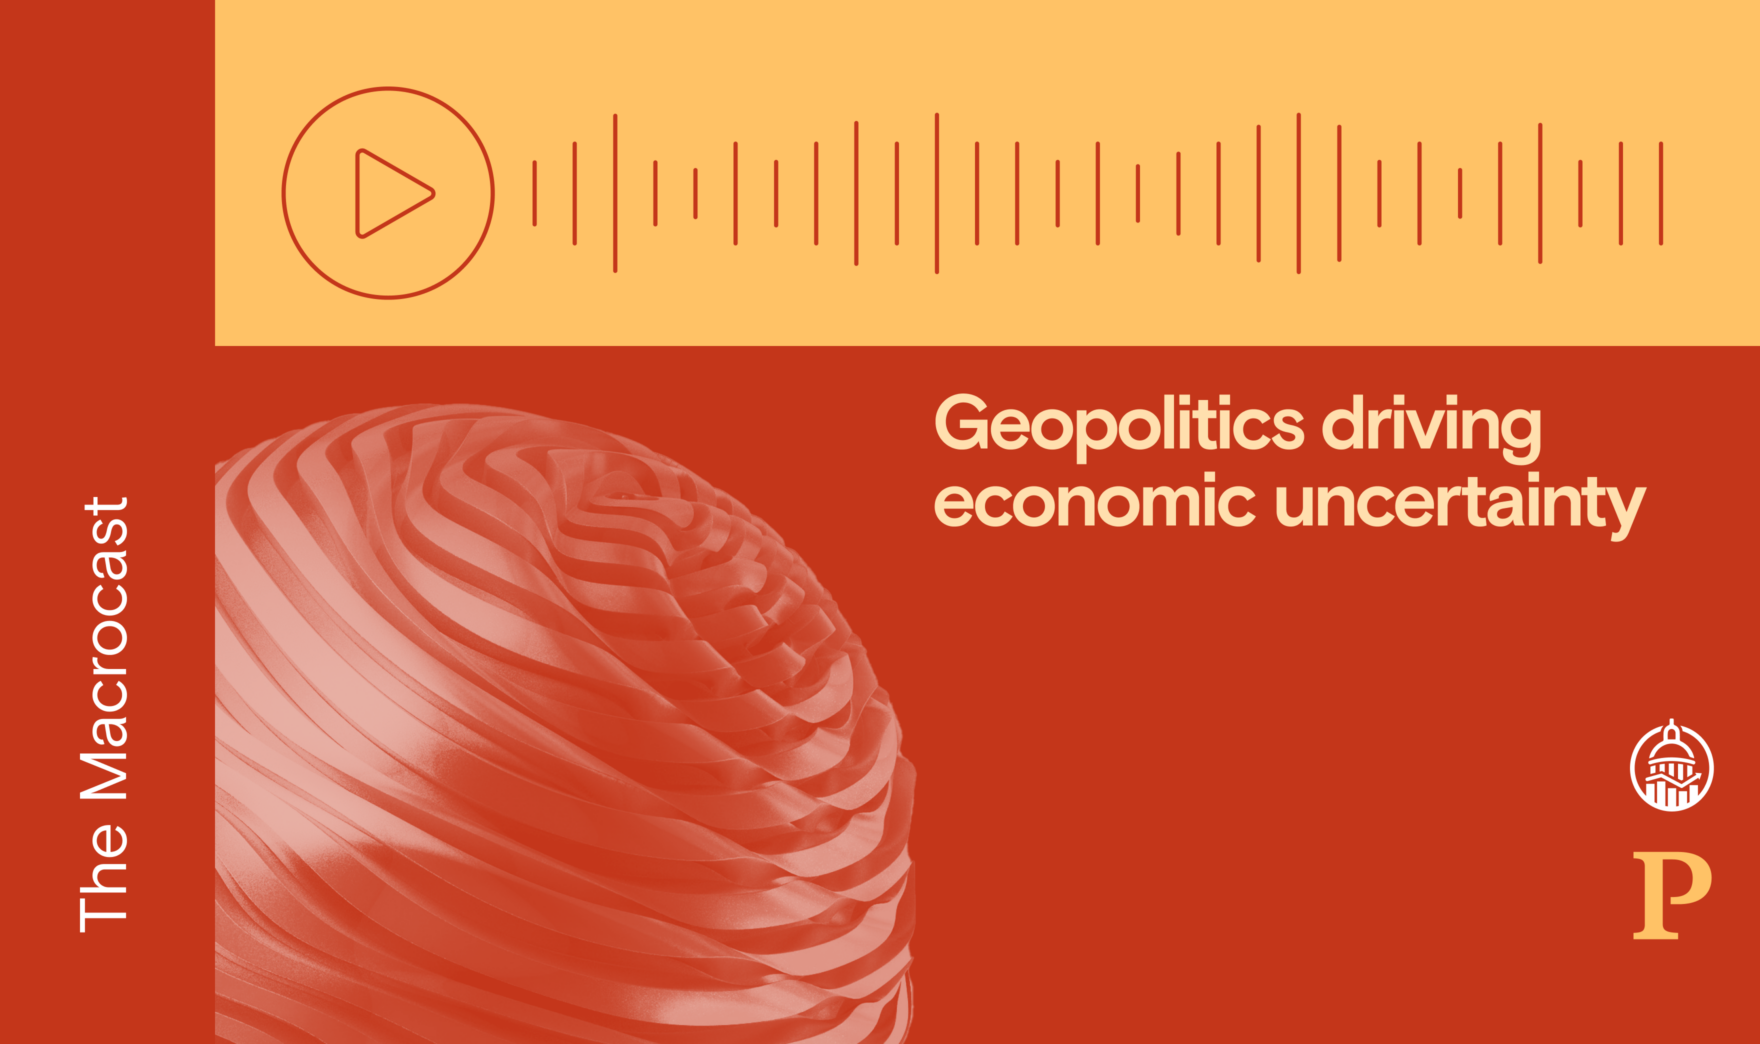 Macrocast: Geopolitics driving economic uncertainty